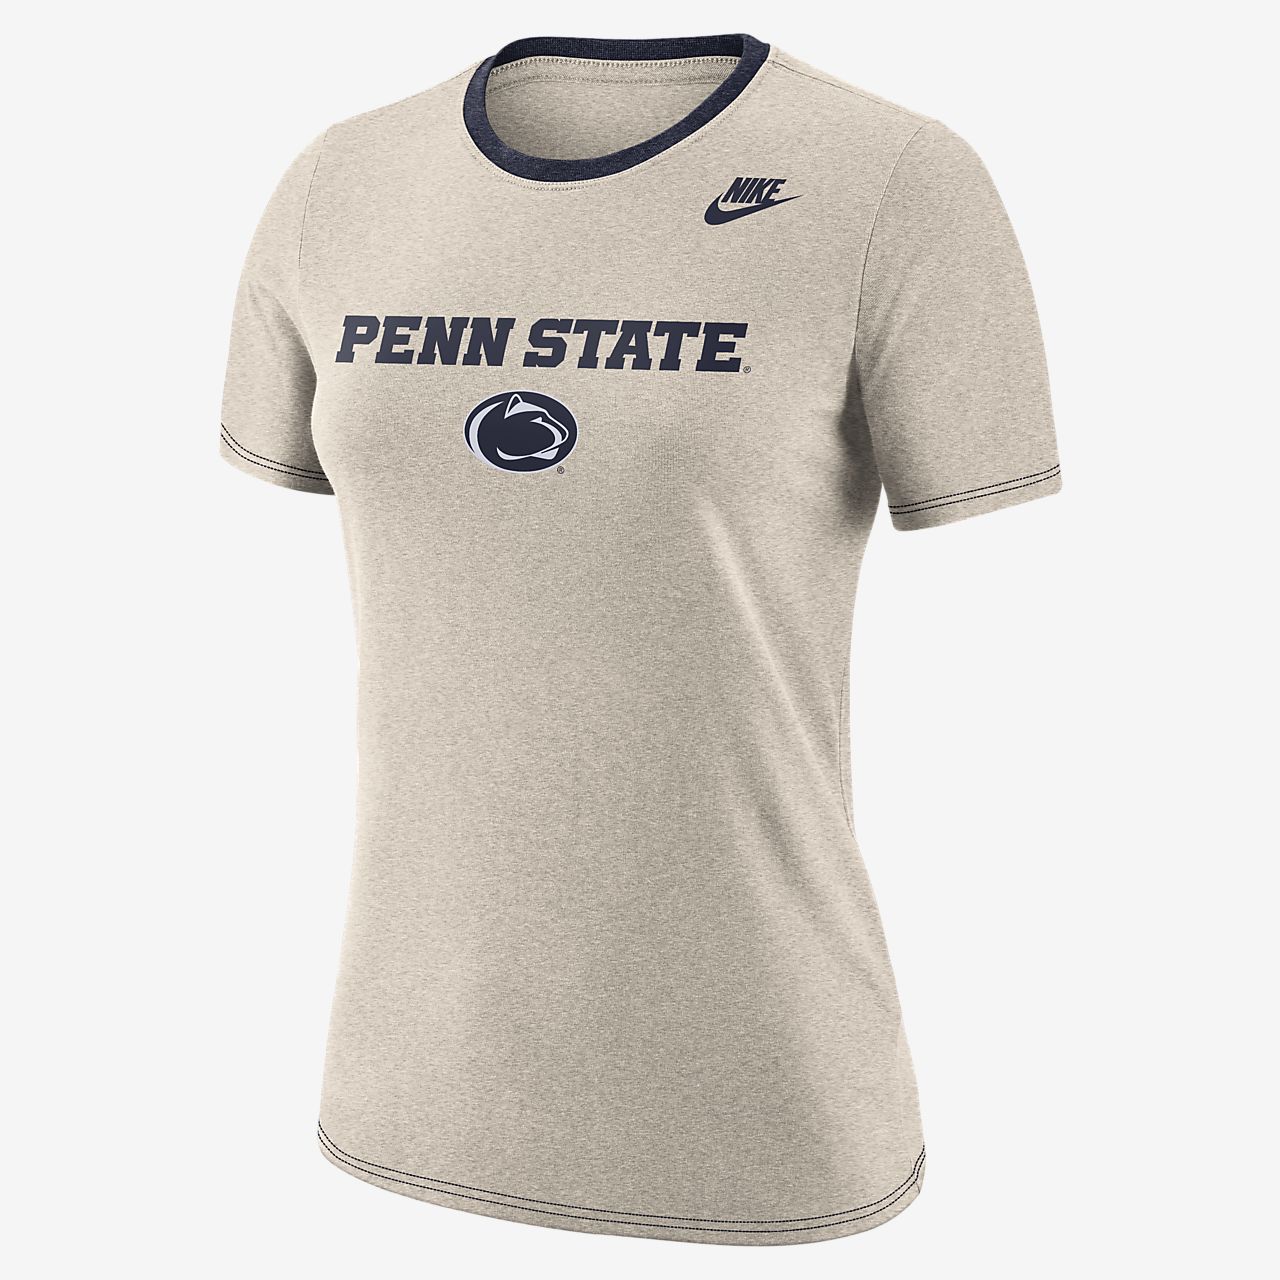 penn state tee shirts